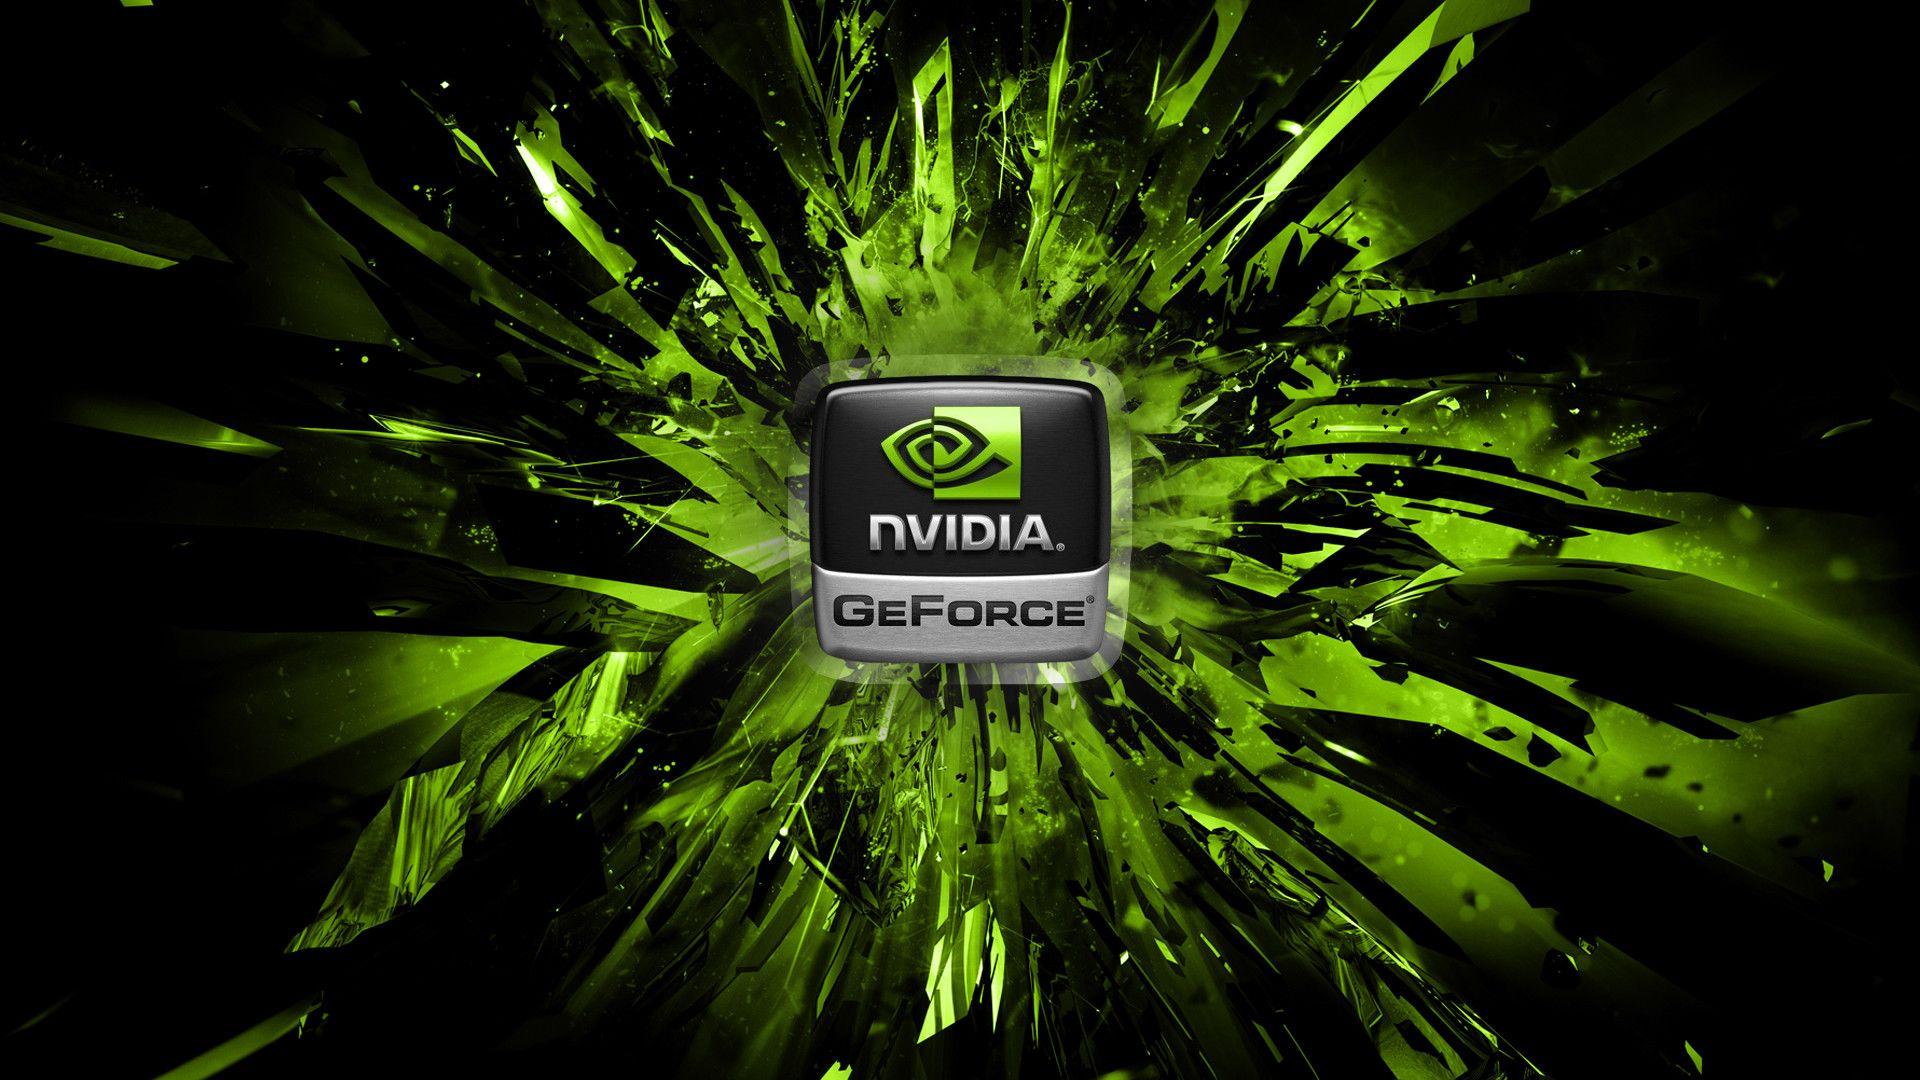 Nvidia 4k Gaming Wallpapers Top Free Nvidia 4k Gaming Backgrounds Wallpaperaccess